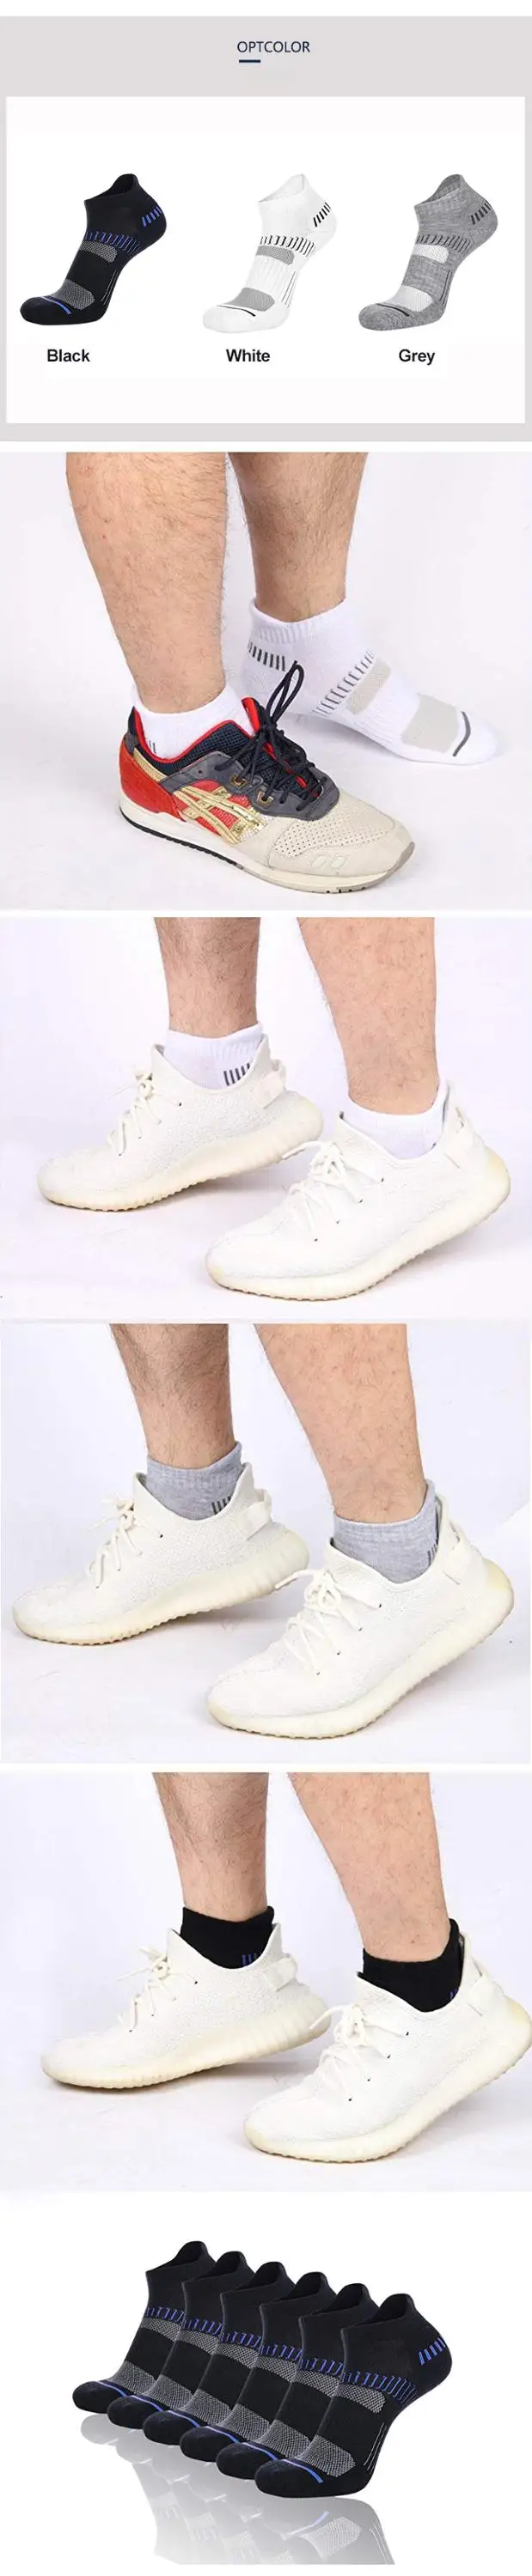 Enerup Customized Sports Cotton Breathe Deodorant Ladies Ankle Sports Elastic Length Socks Men